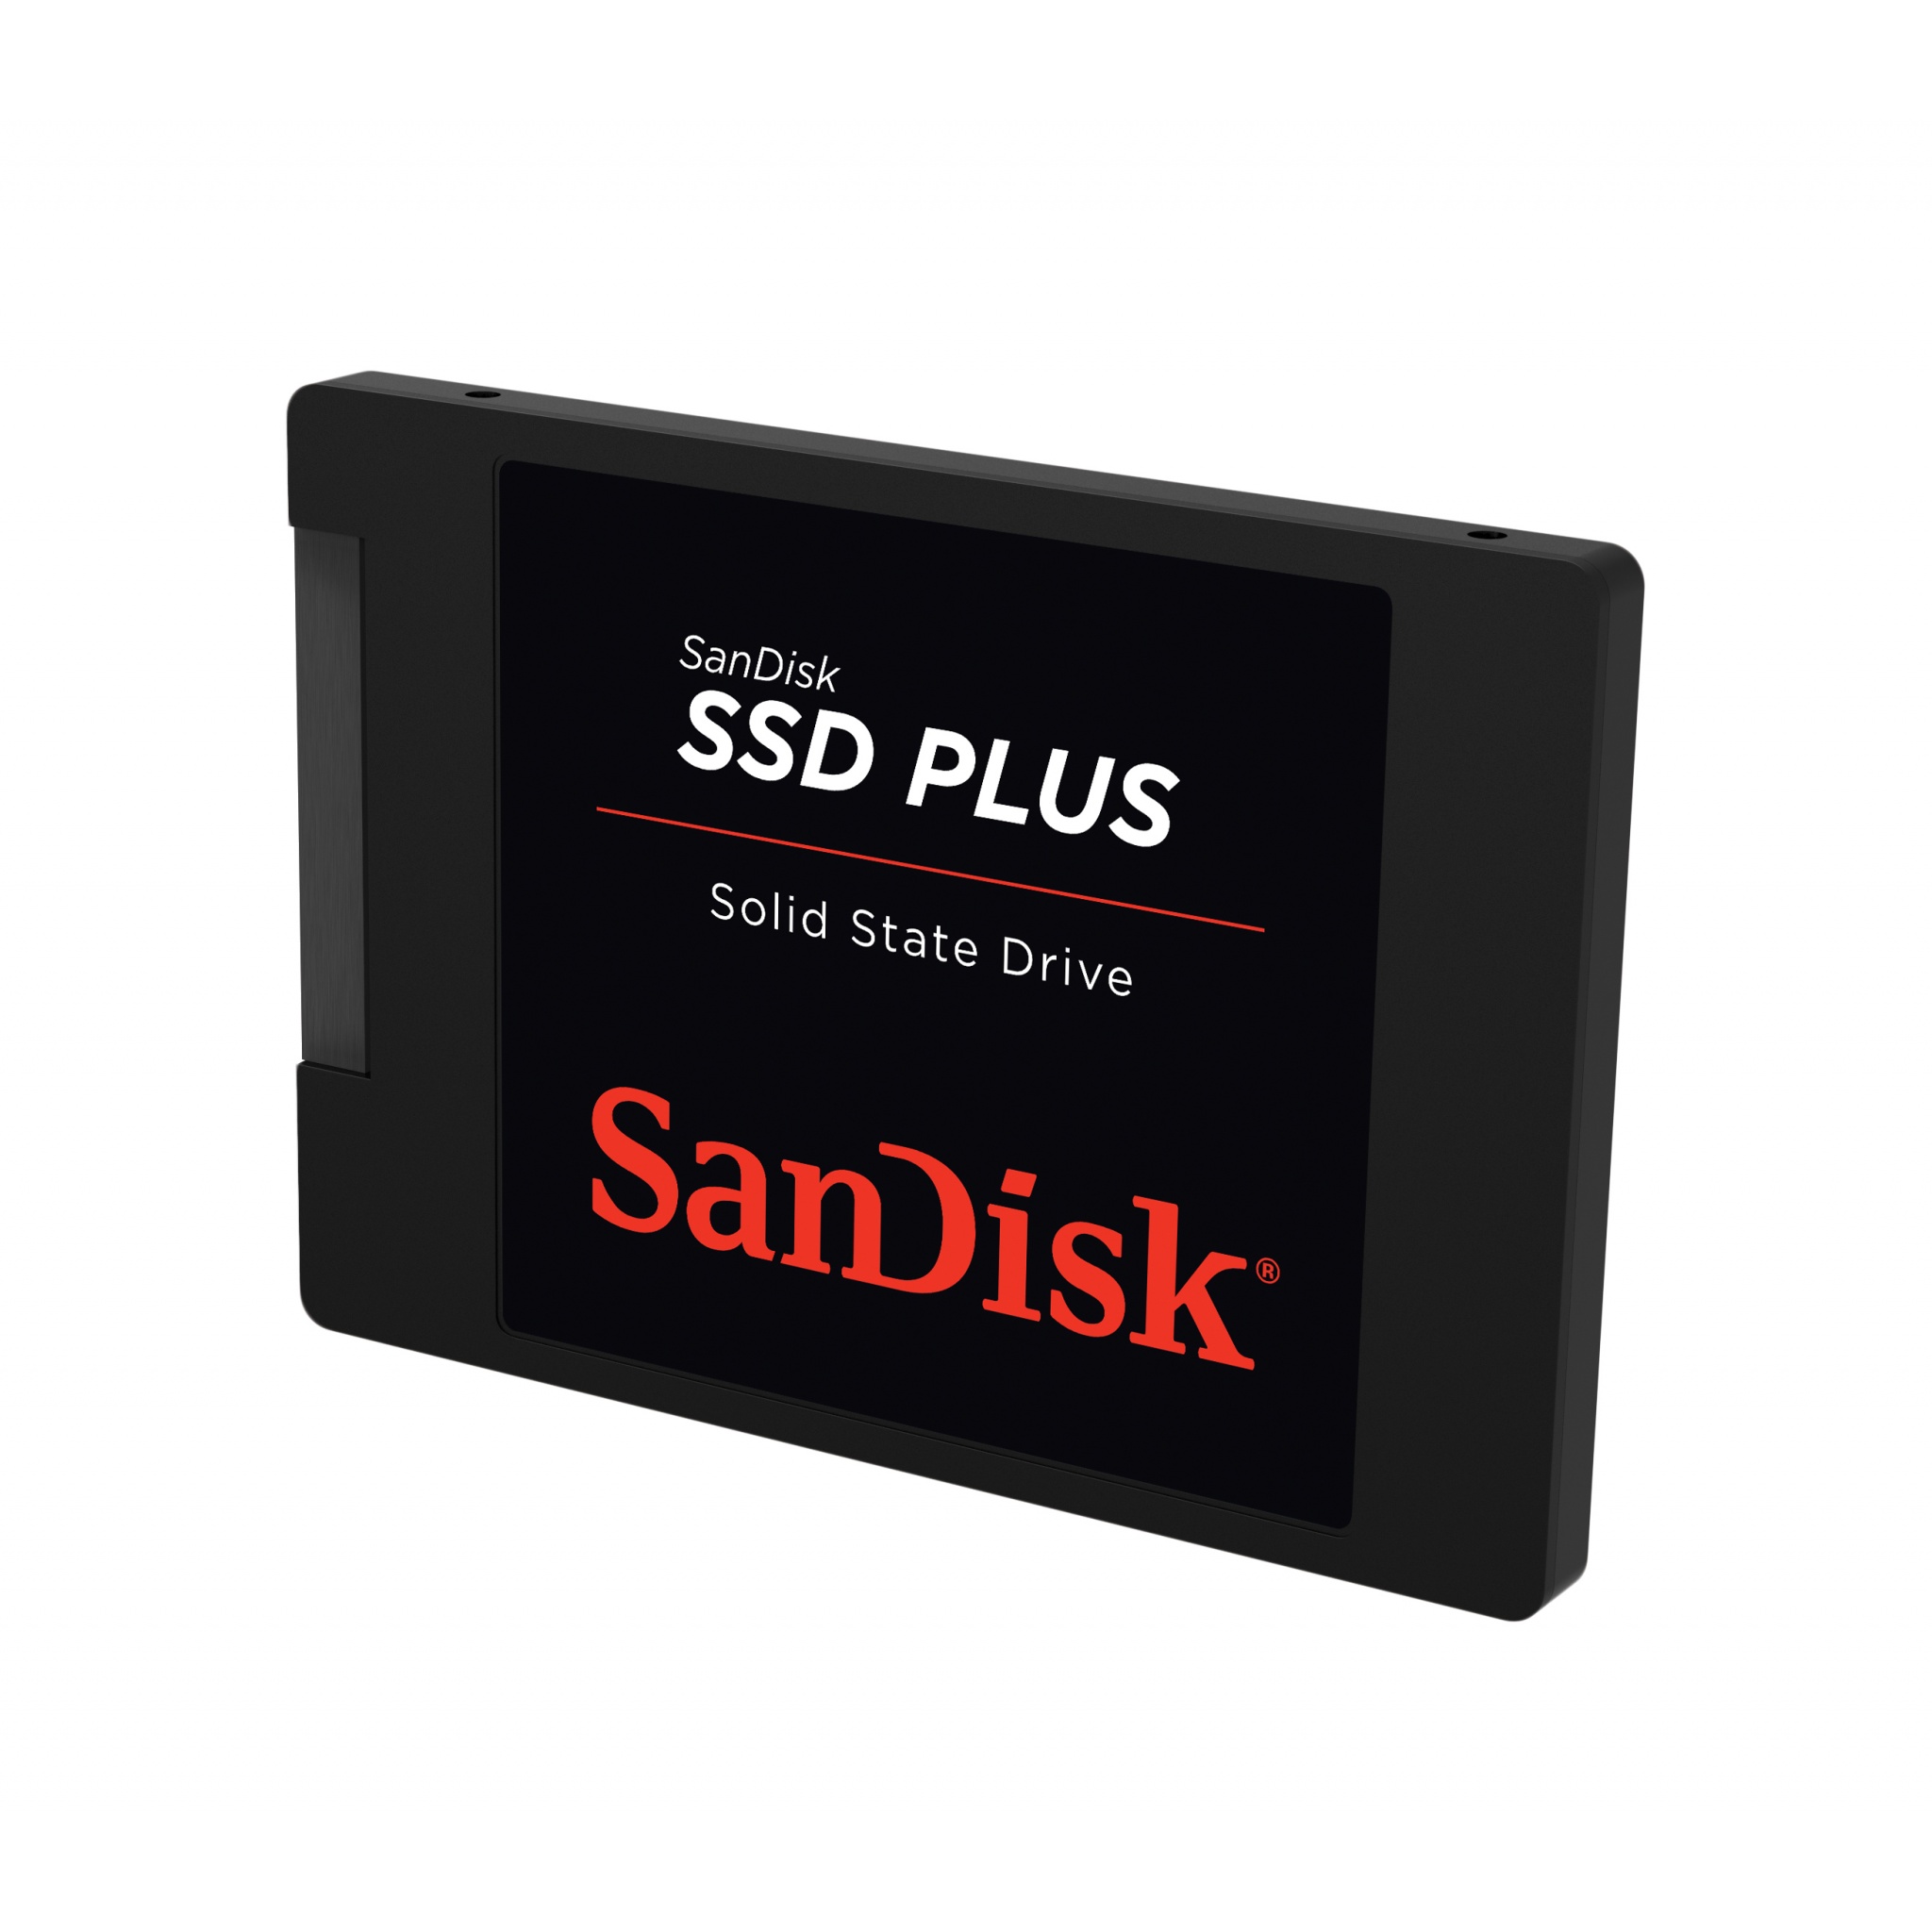 VisionTek PRO HXS 7mm 2.5 SSD (SATA) –